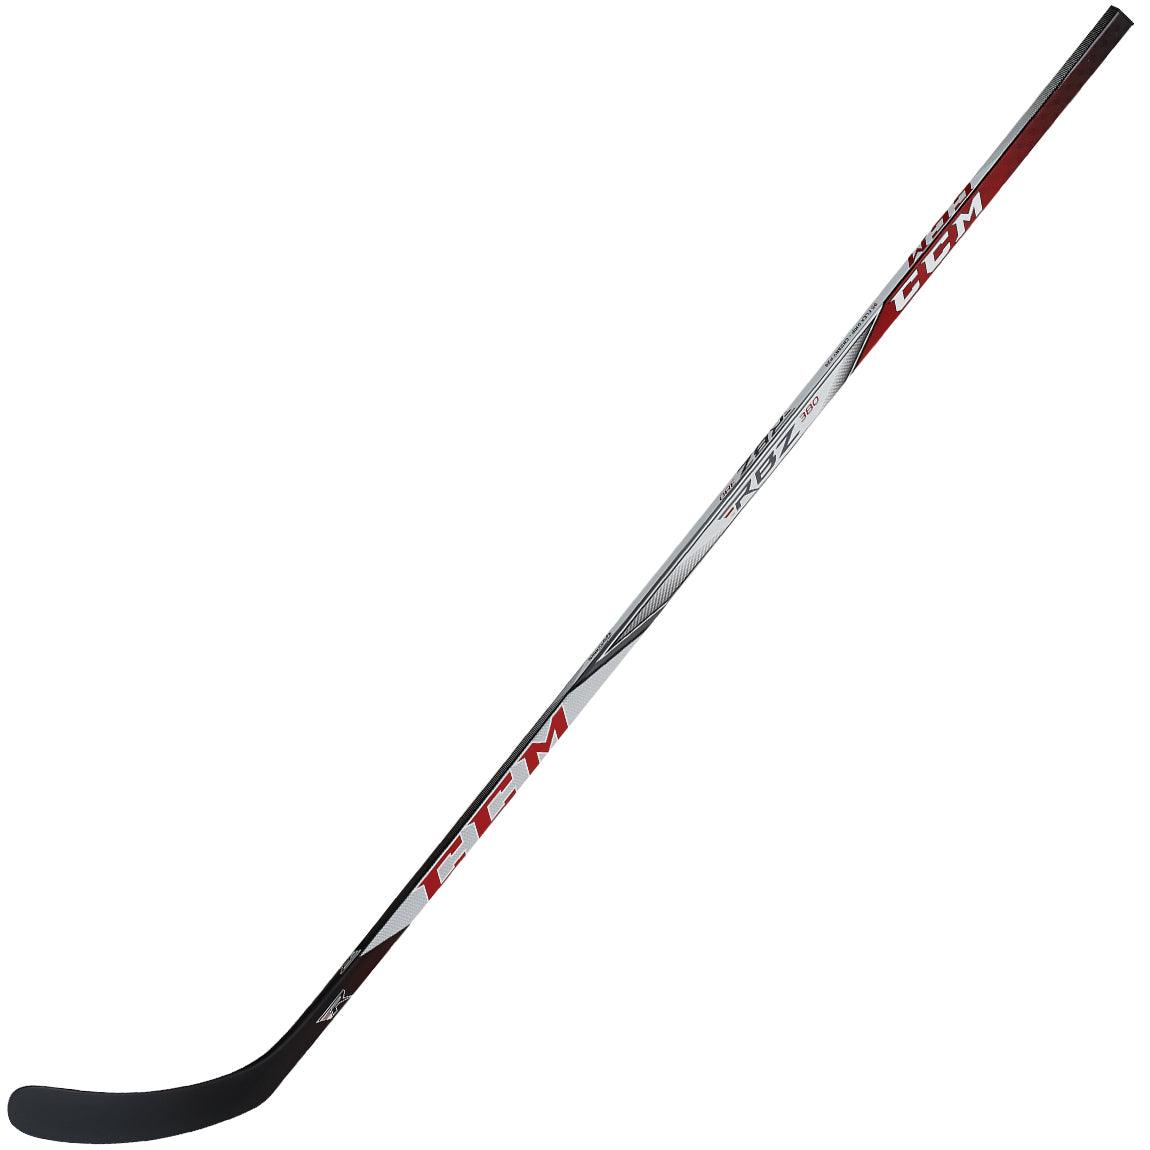 RBZ 380 Hockey Stick - Senior - Sports Excellence